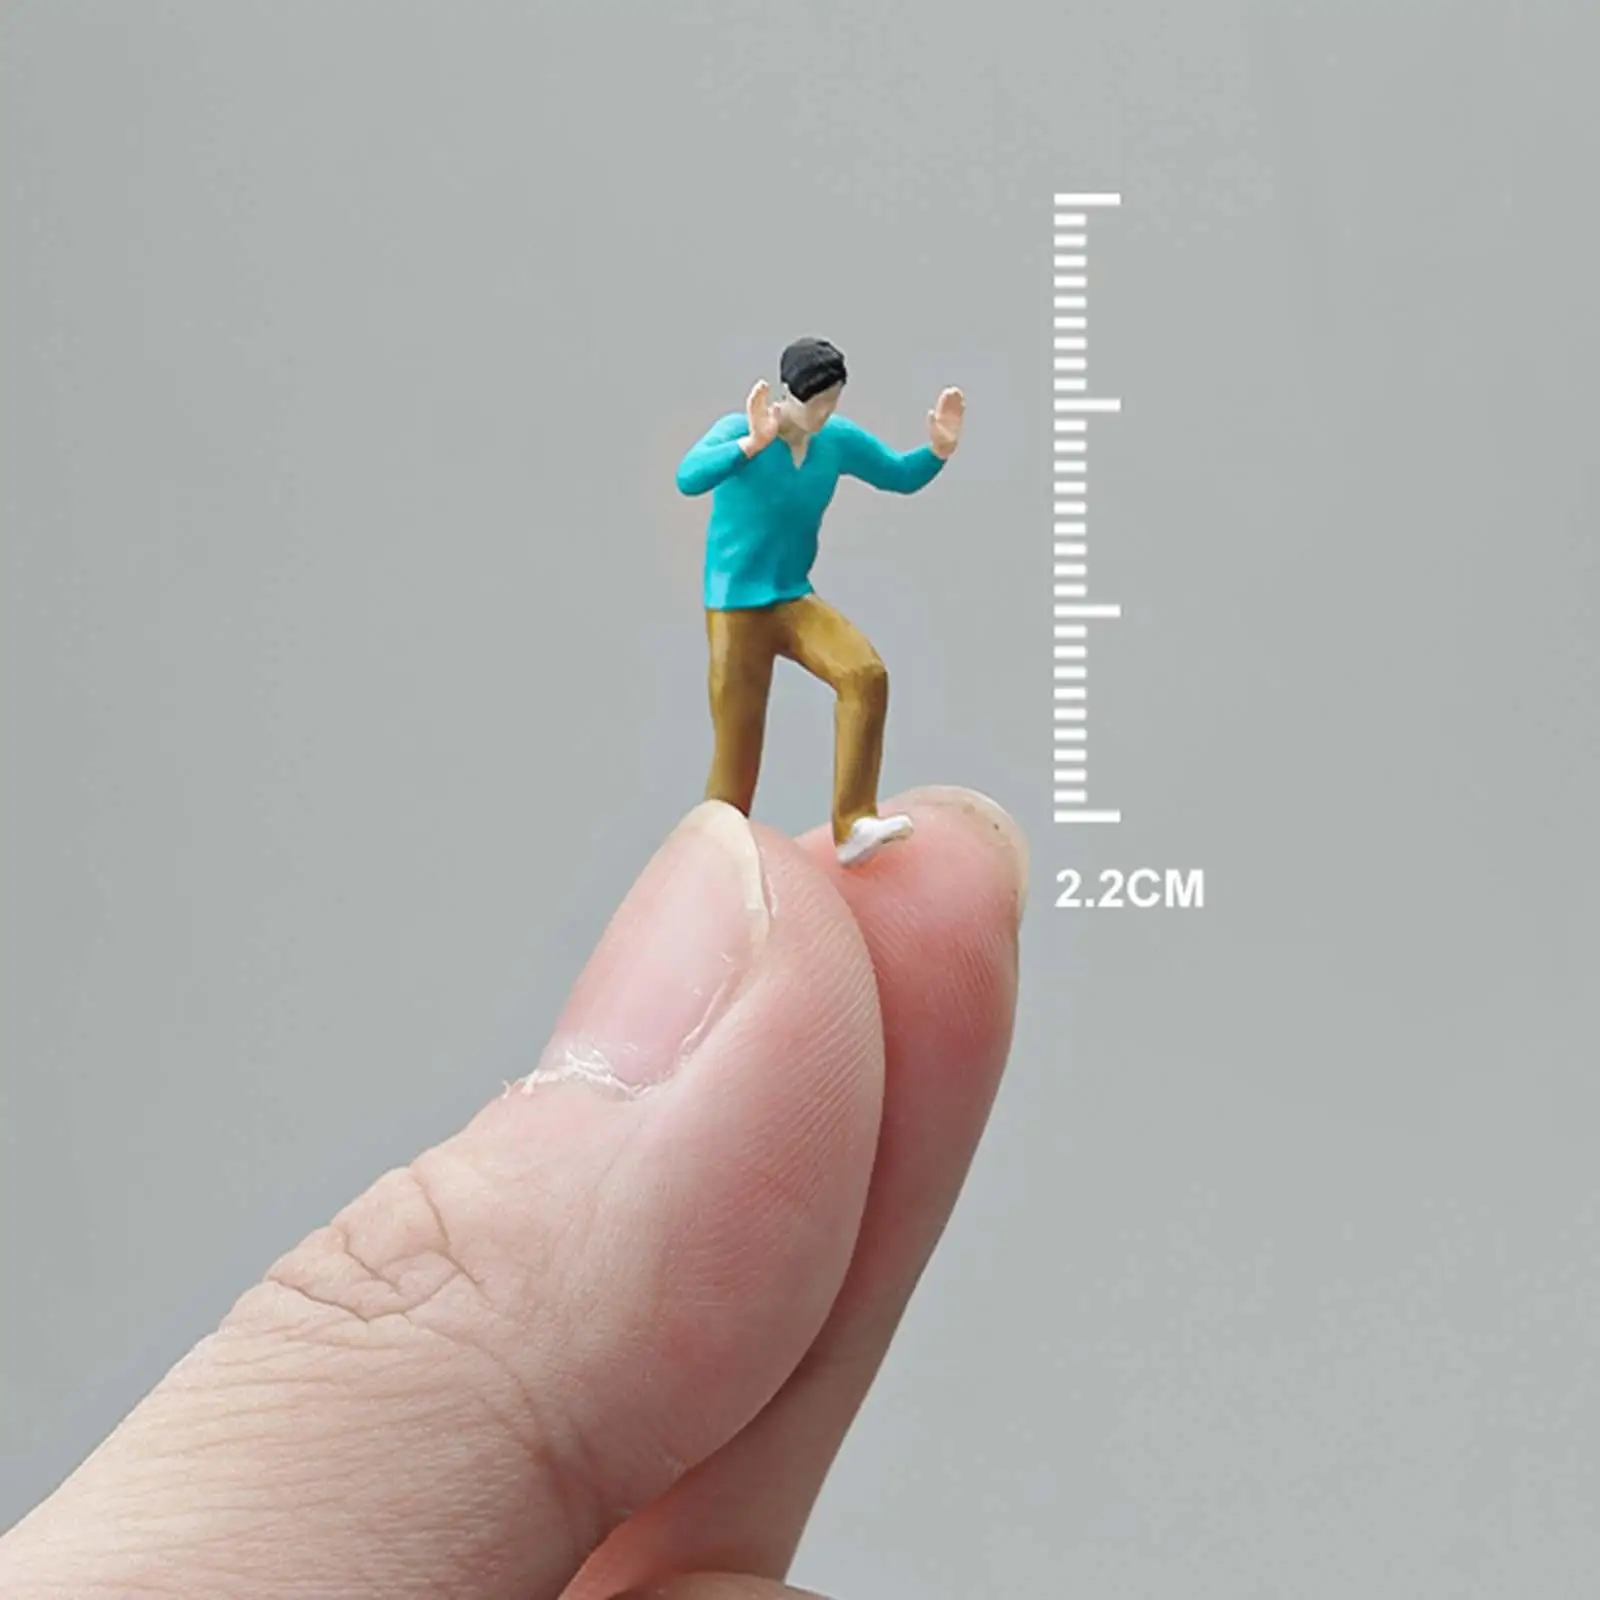 1/64 Miniature Model Figures Photography Props Simulation Figurines Mini People Model 1/64 Figures Model DIY Scene Decor